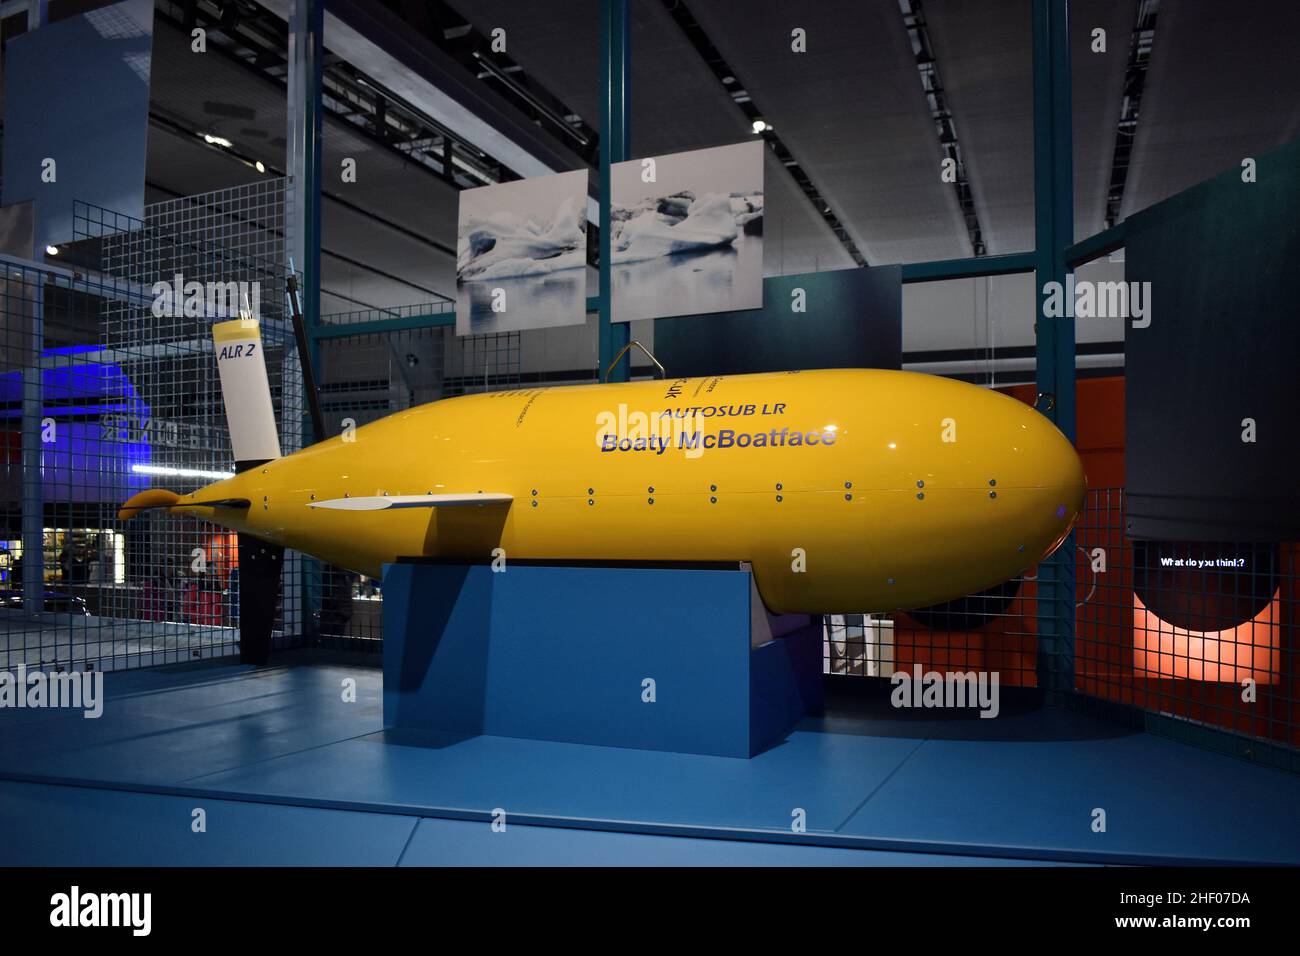 Boaty McBoatface - autonomous underwater vehicle displayed at Science Museum London UK. Stock Photo